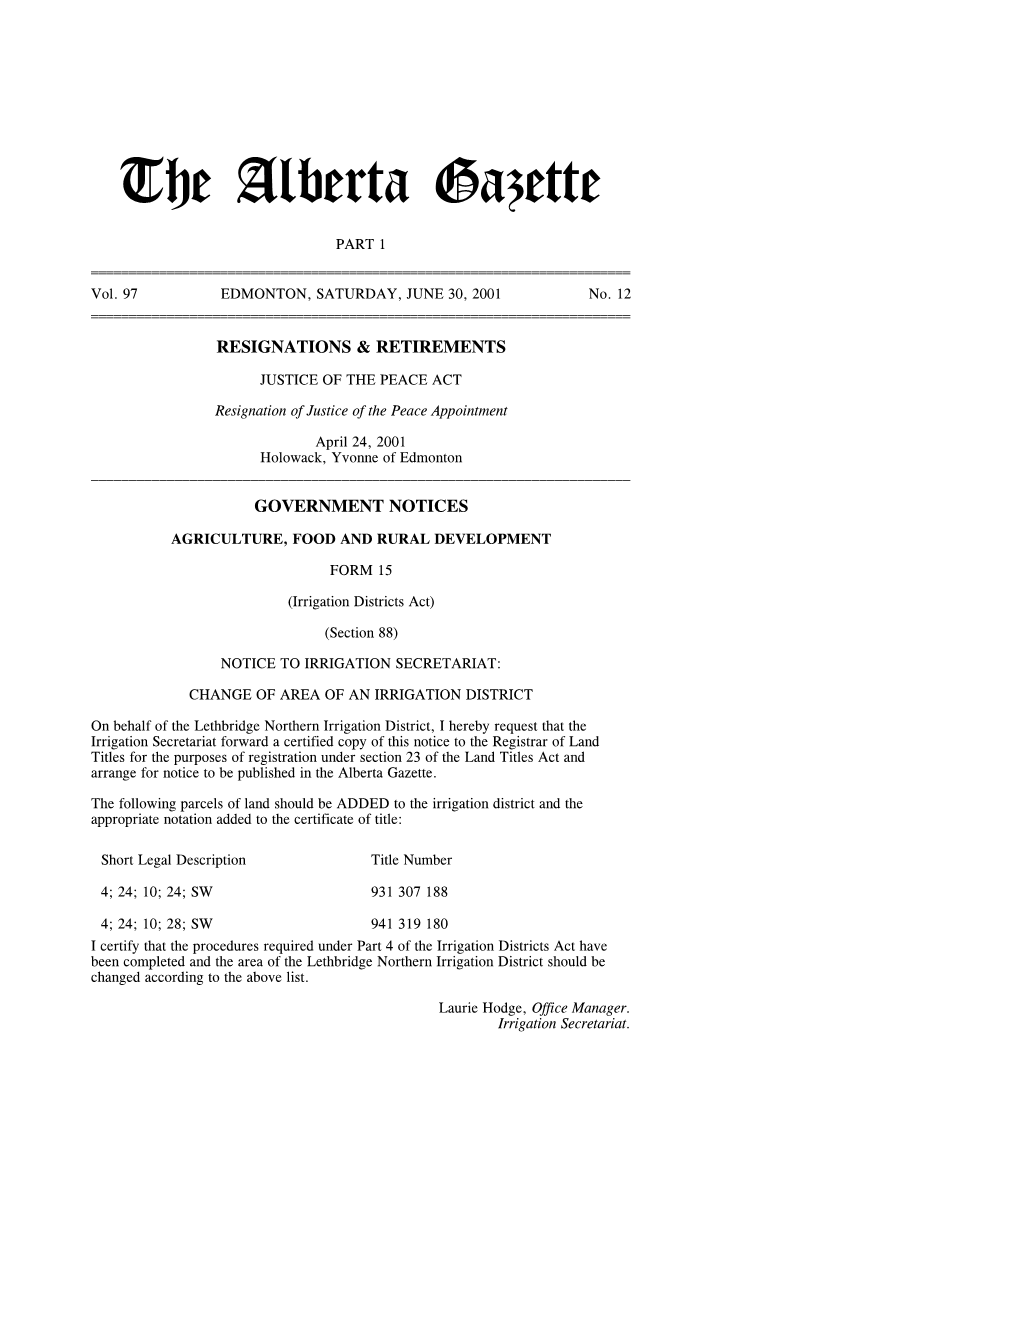 The Alberta Gazette, Part I, June 30, 2001